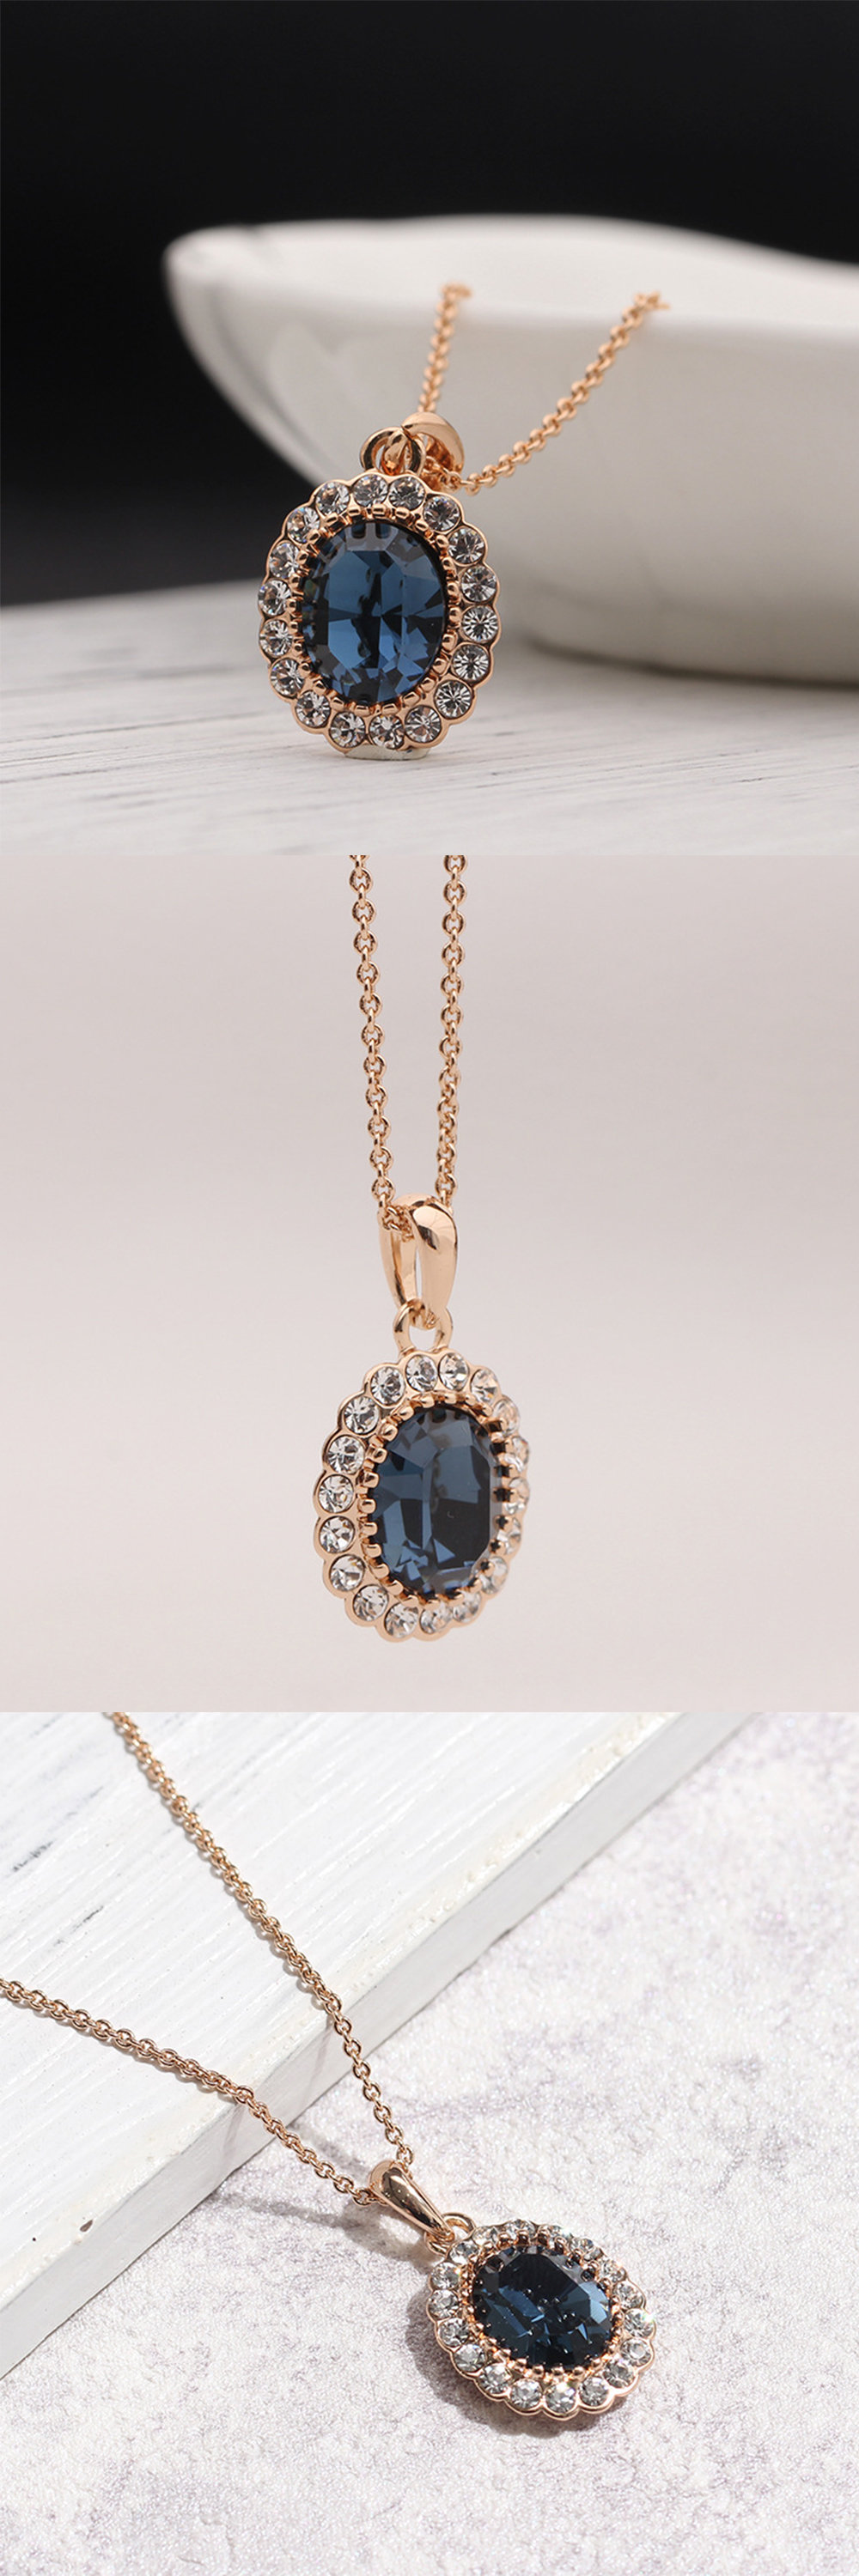 Crystal Pendant Necklace - ApolloBox